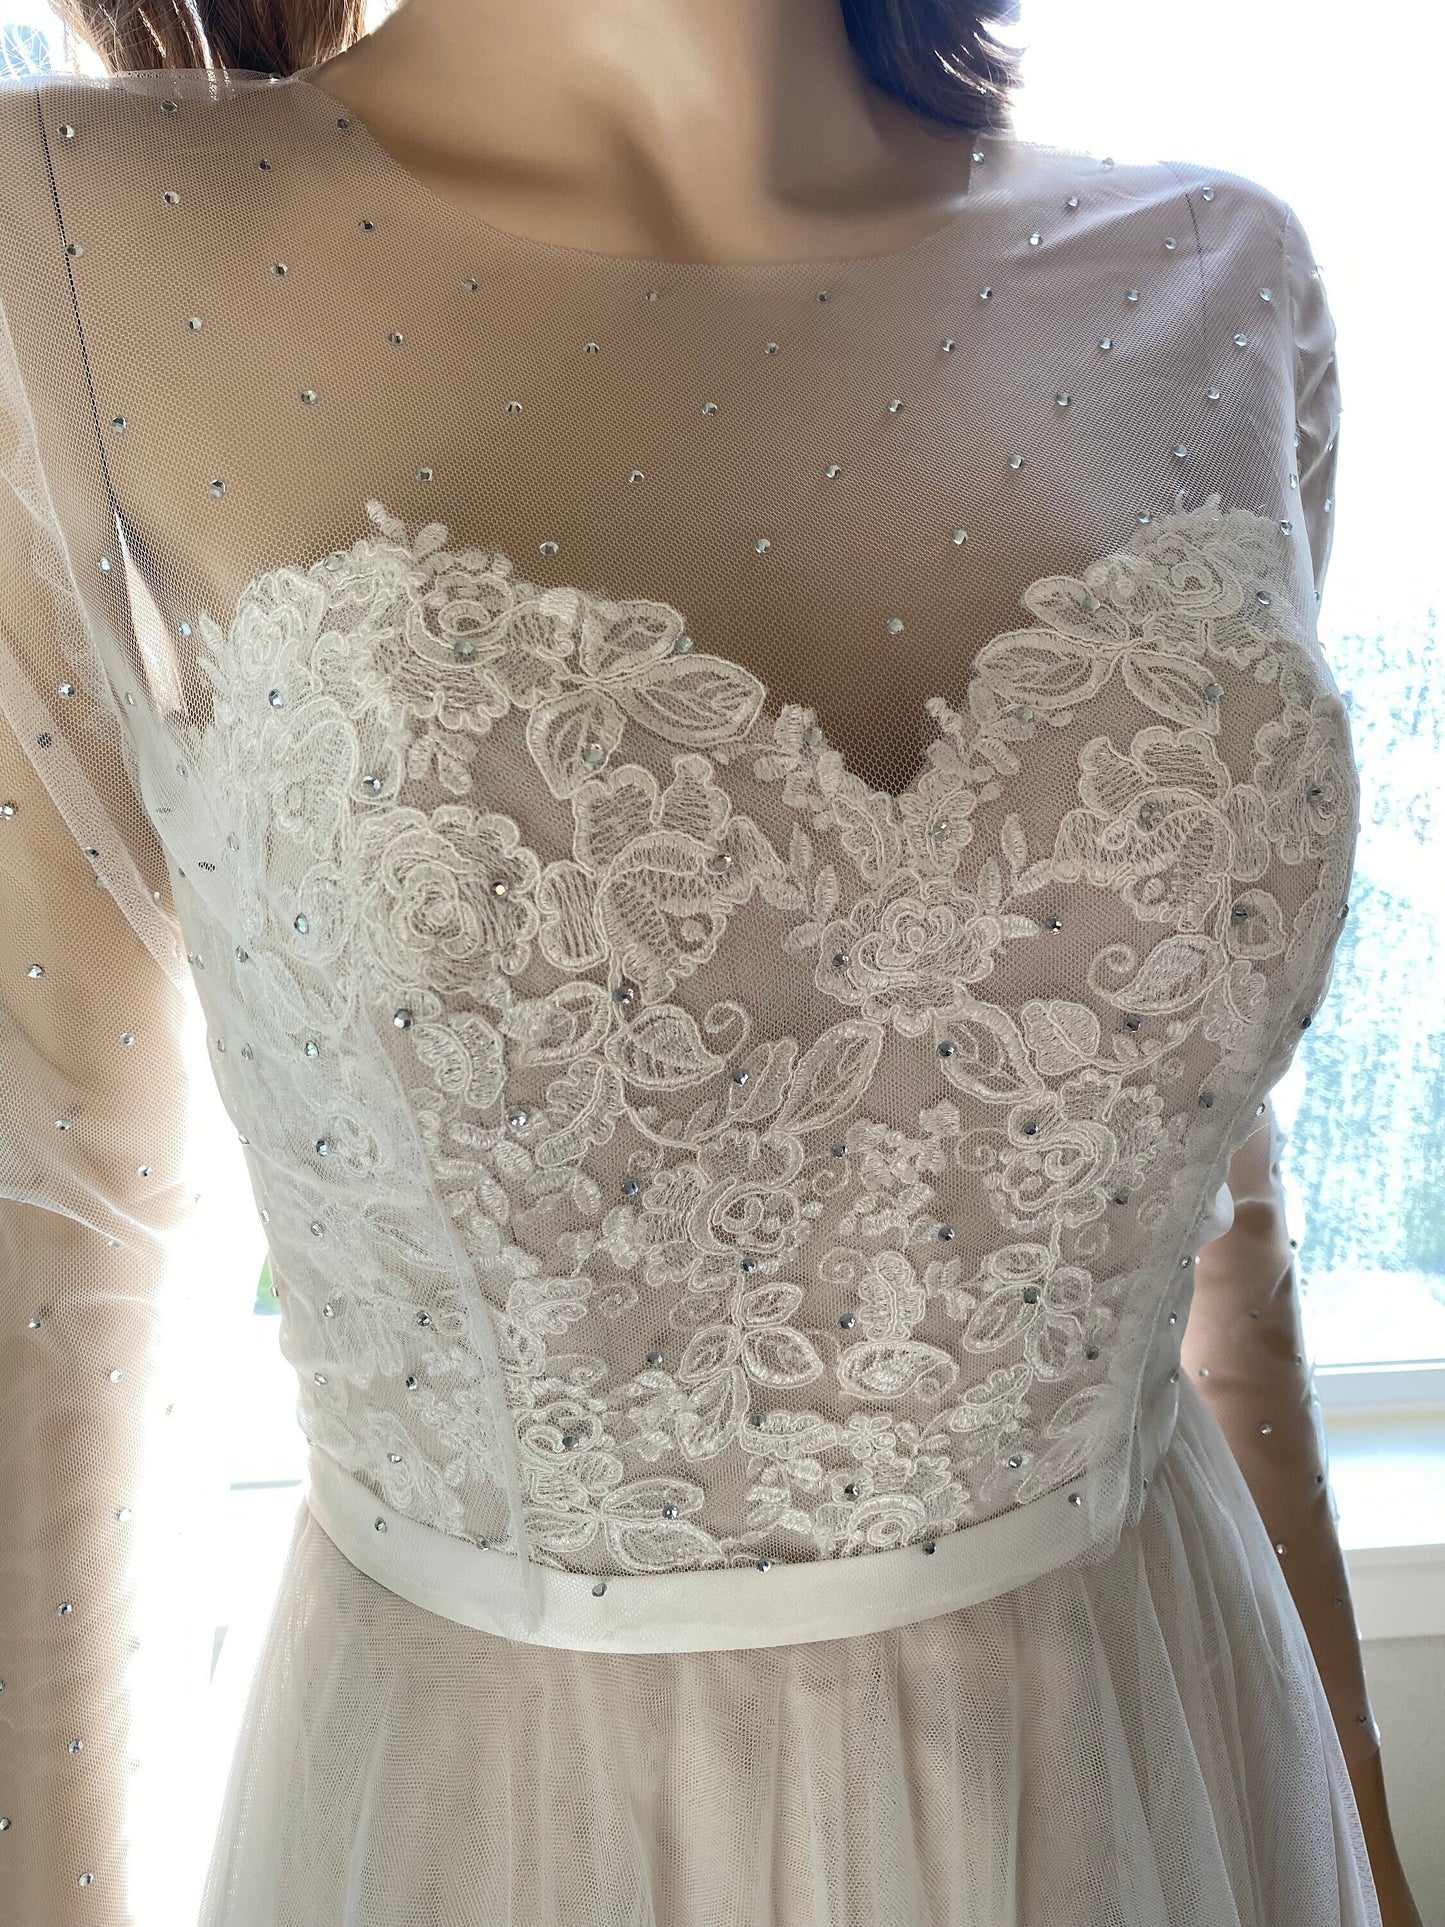 Rhinestone wedding dress topper in ivory color, buttoned back, wedding bolero, wedding jacket, bridal bolero, boat neck